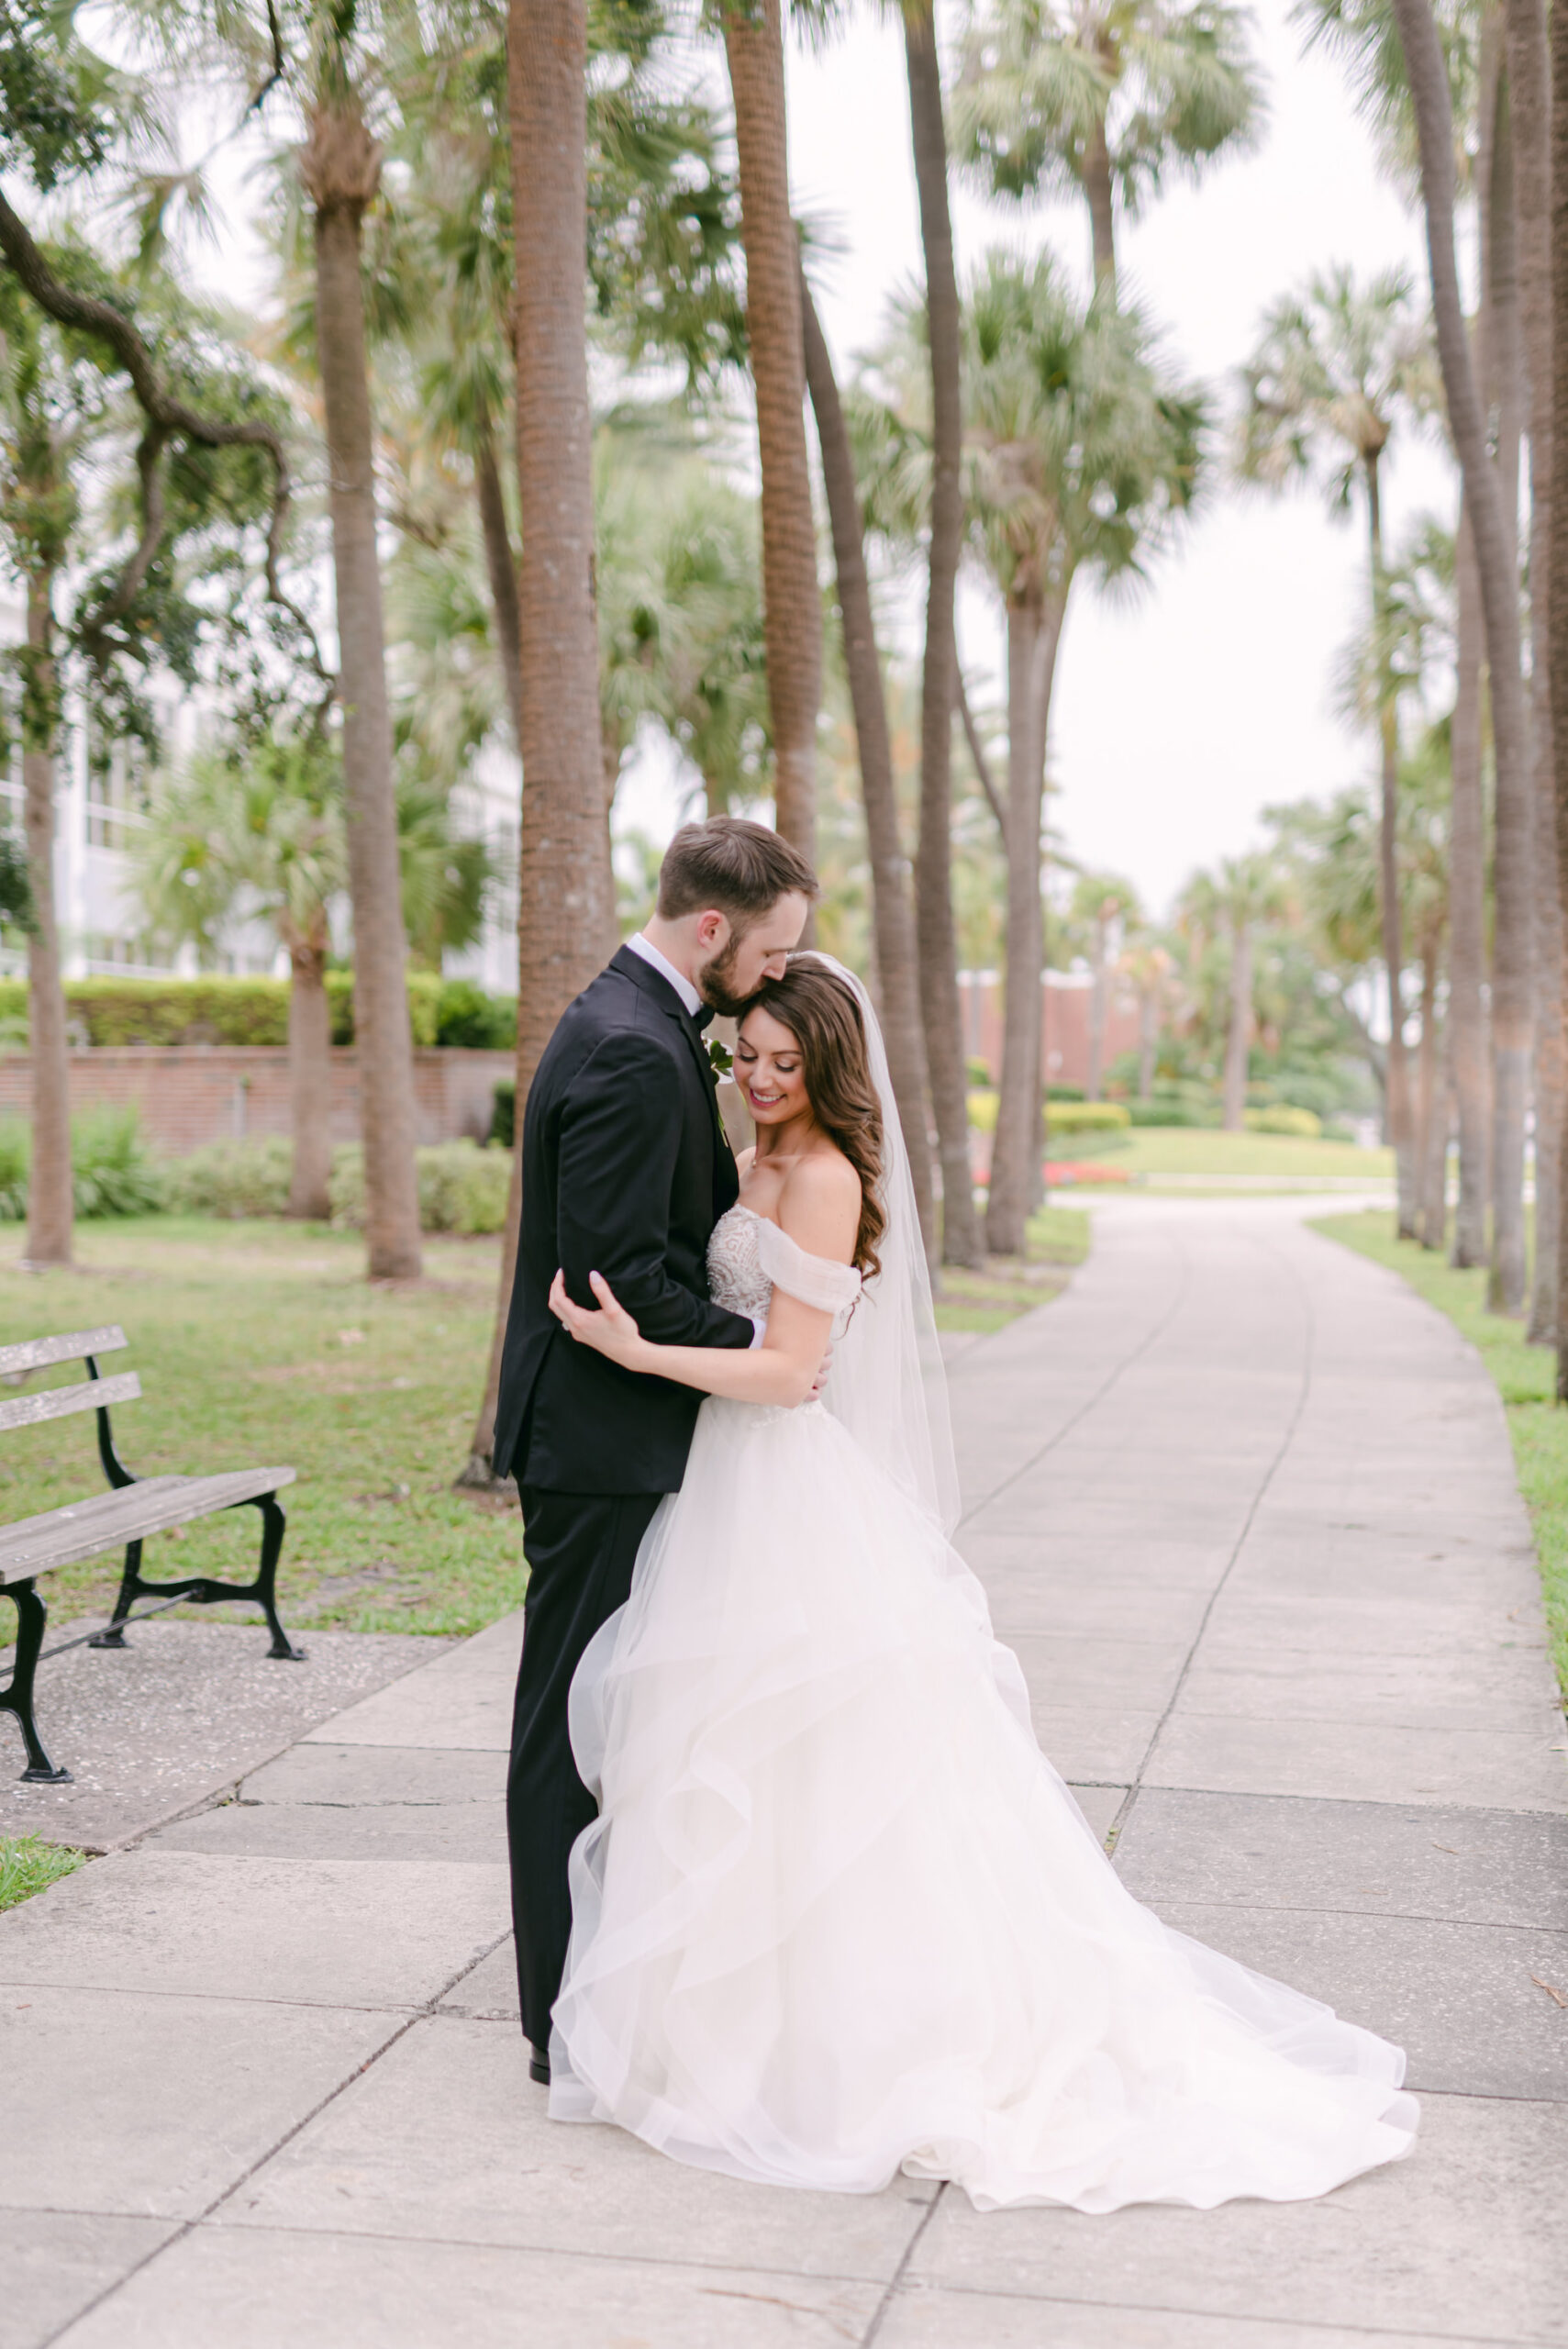 Intimate Bride and Groom Wedding Portrait | University of Tampa